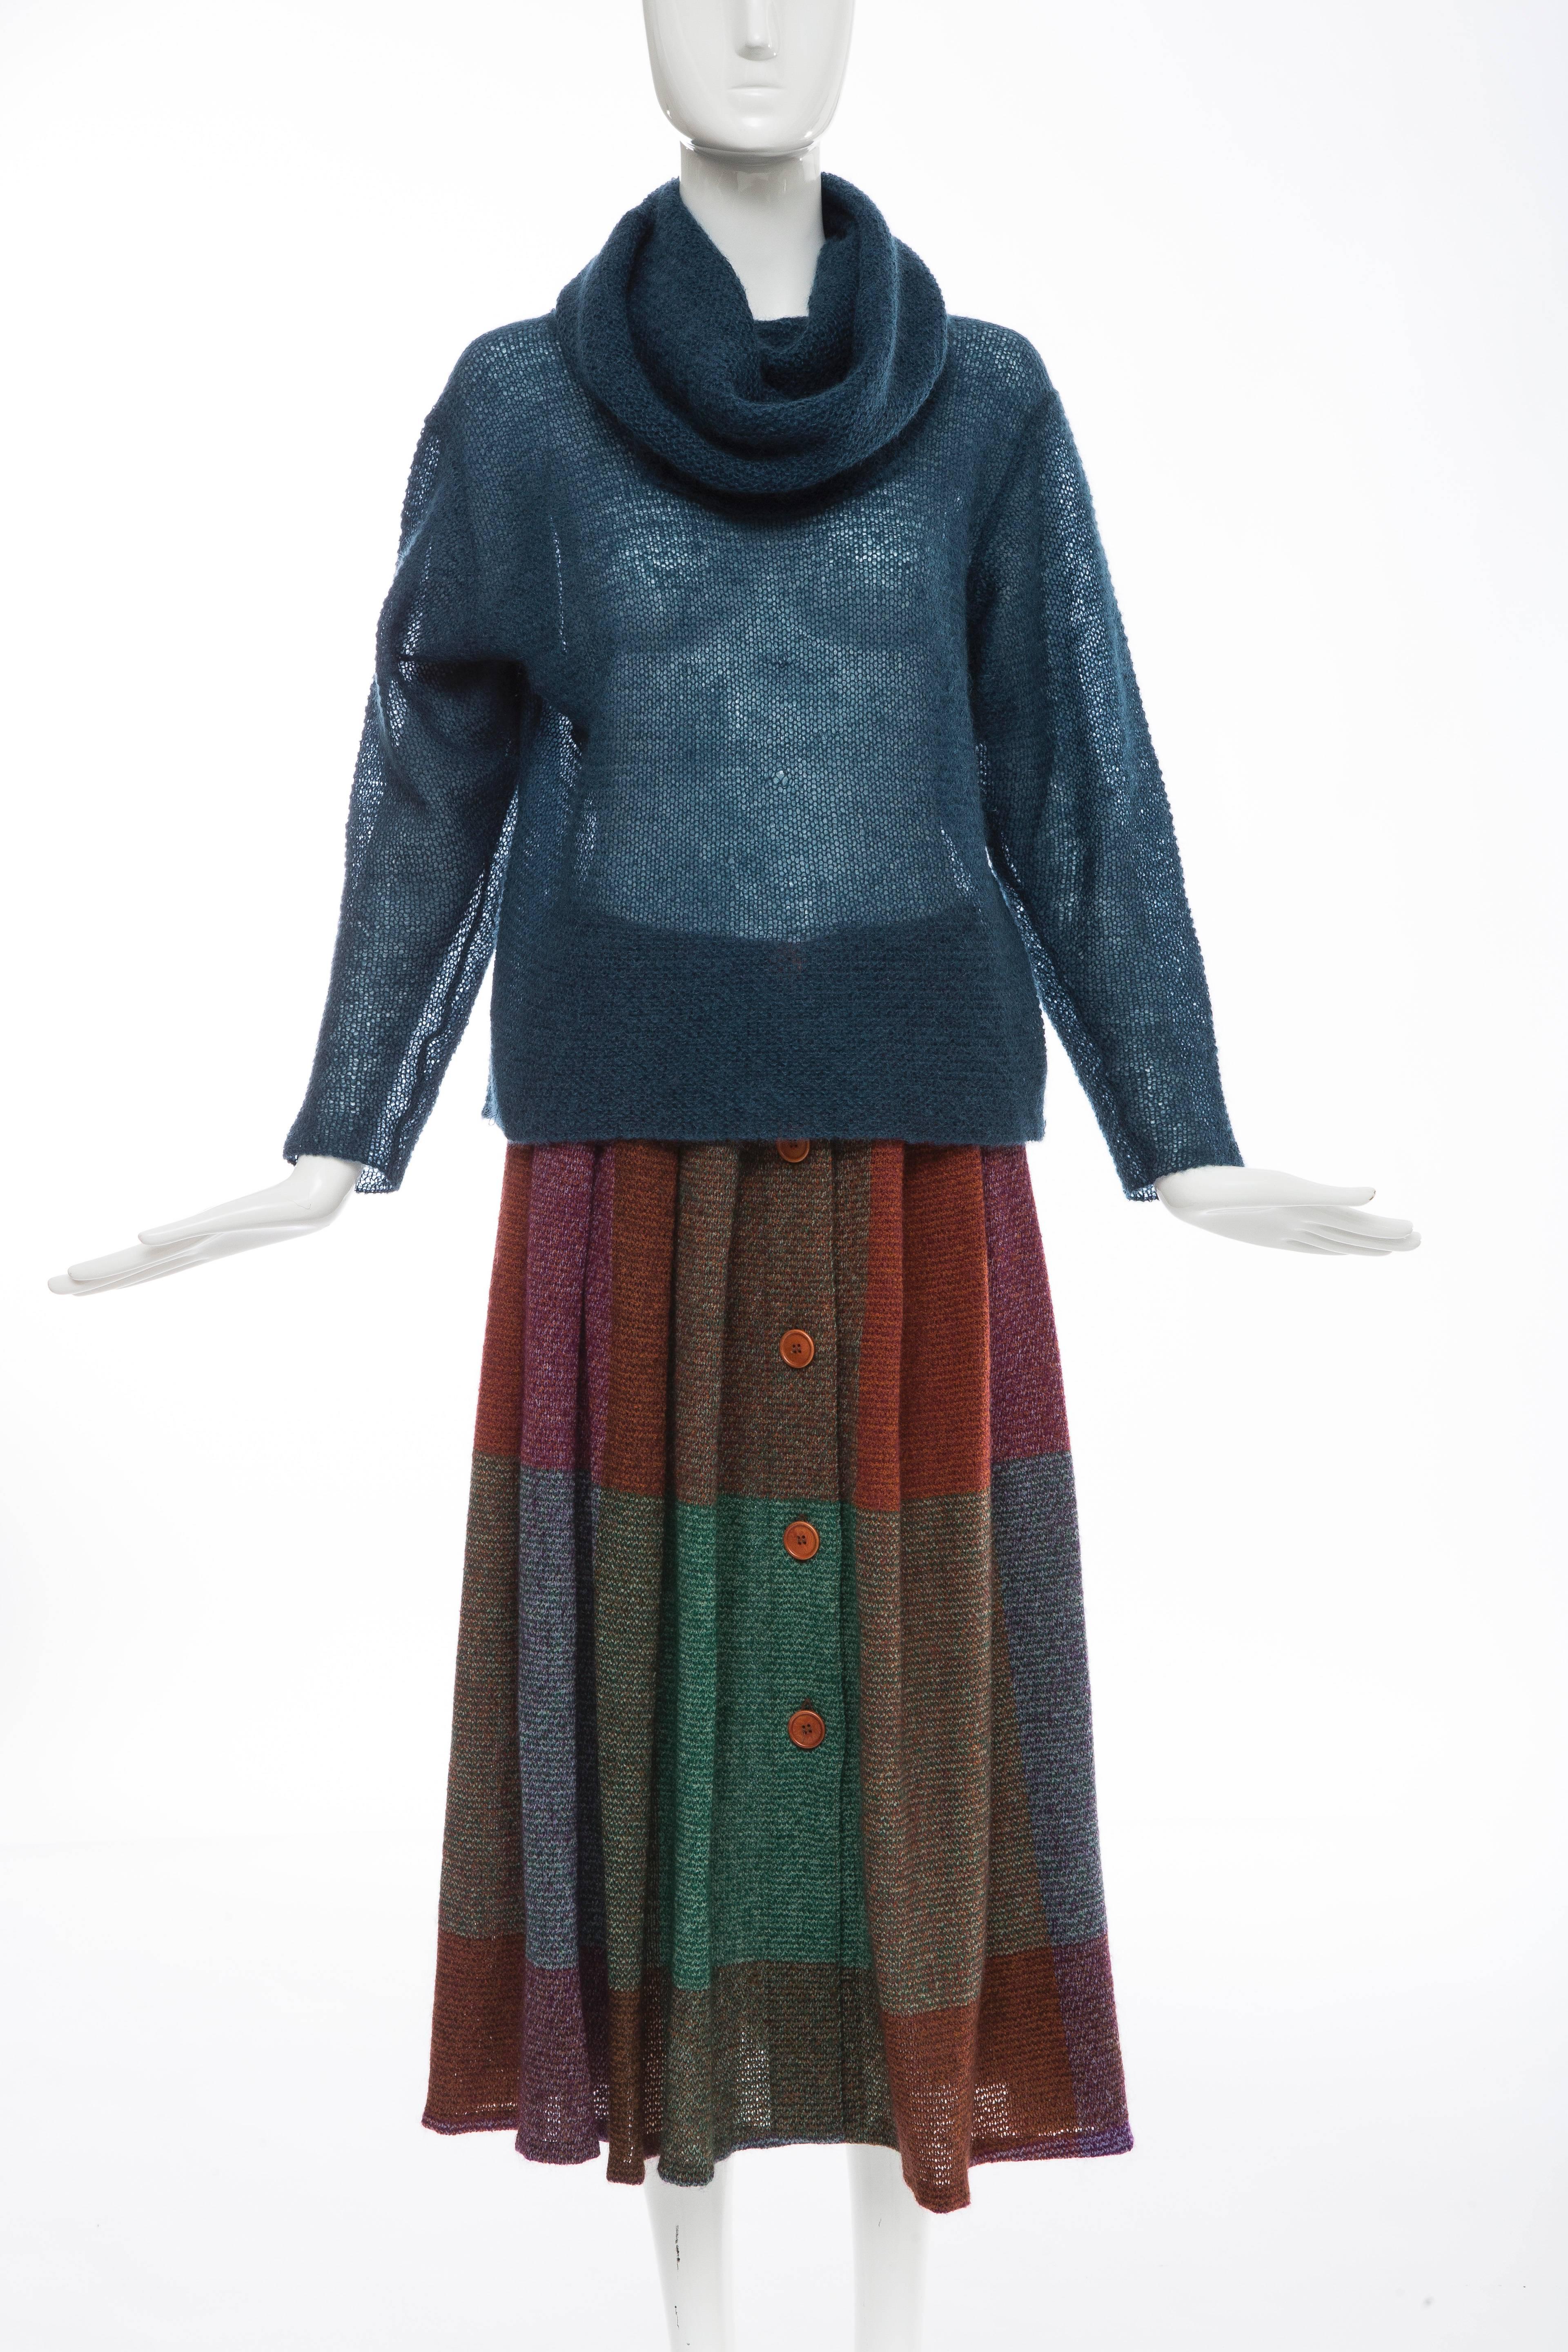 Missoni Knit Plaid Tweed Mohair Skirt Suit, Circa 1980's 4